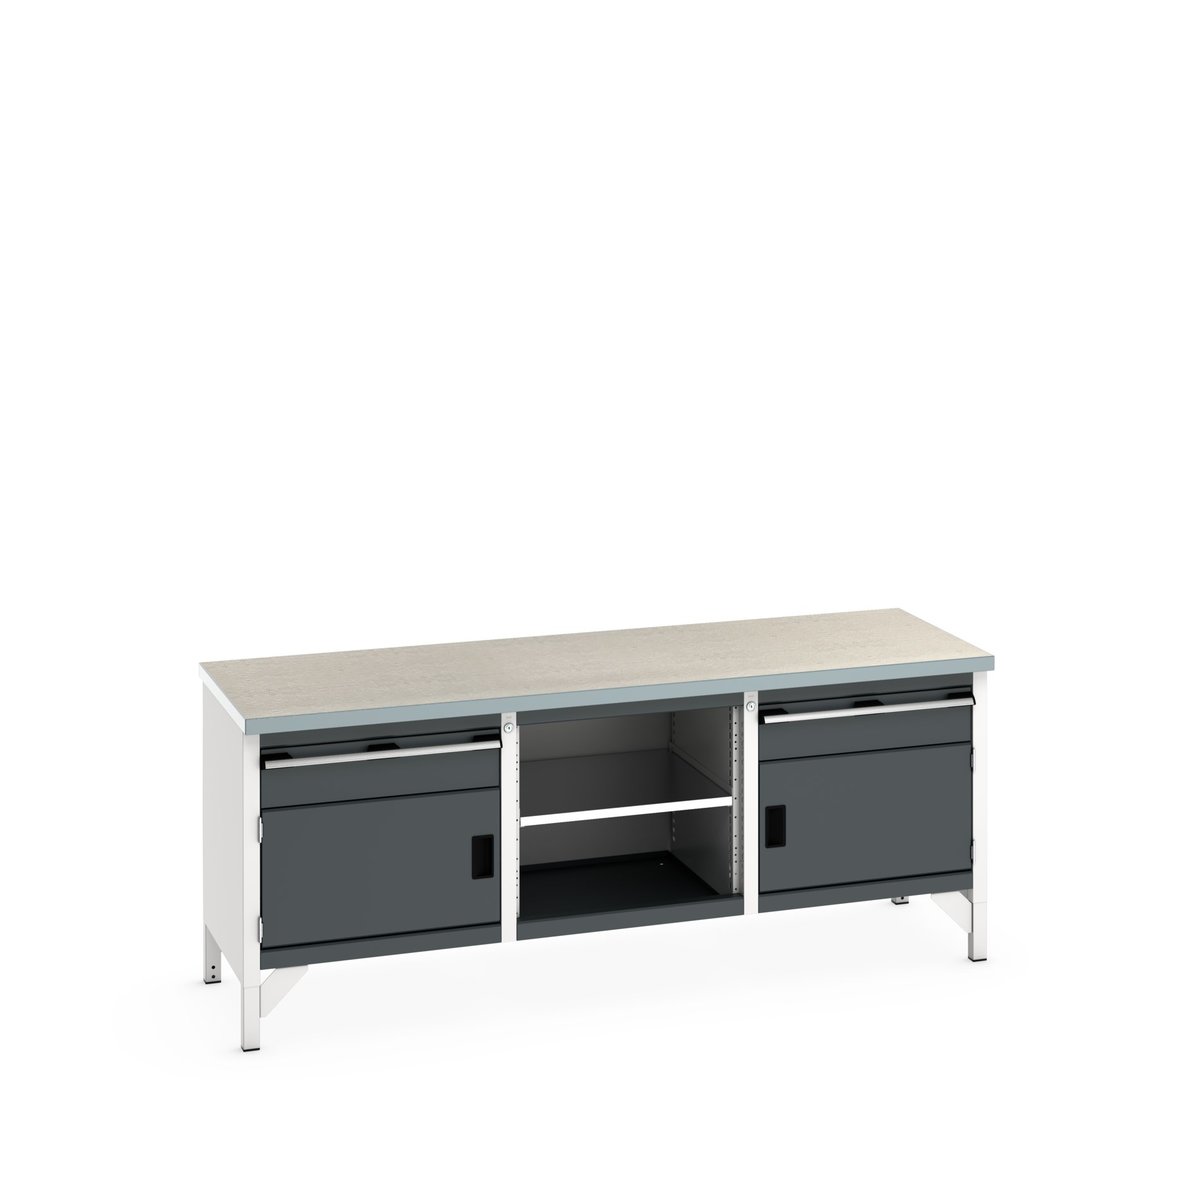 41002054. - cubio storage bench (lino)